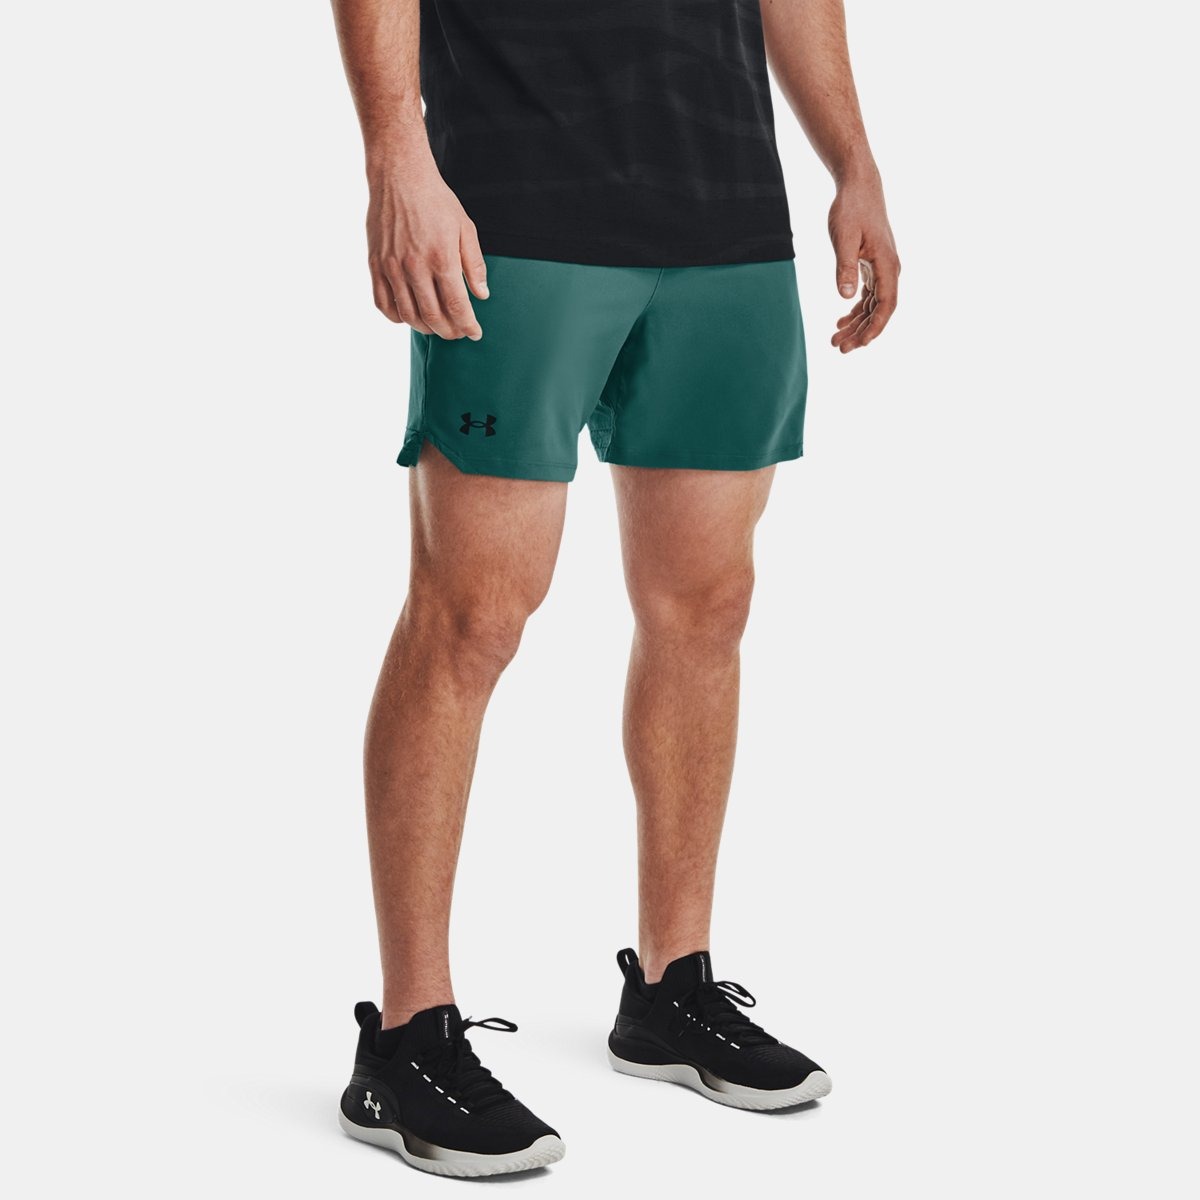 Under Armour - Men's Green Shorts GOOFASH